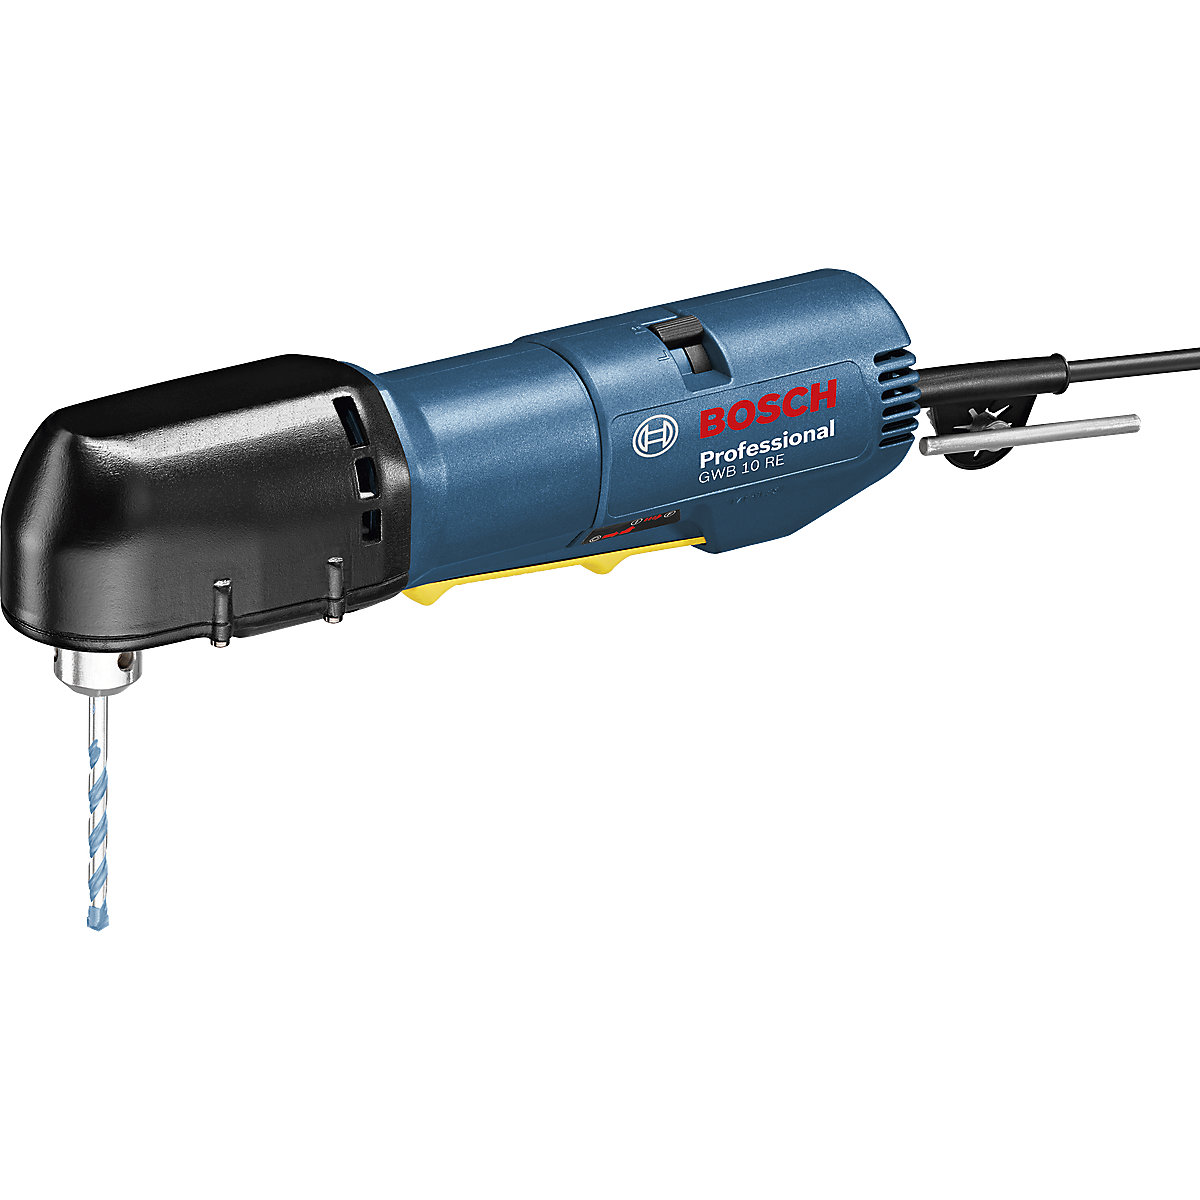 GWB 10 RE Professional angle drill – Bosch